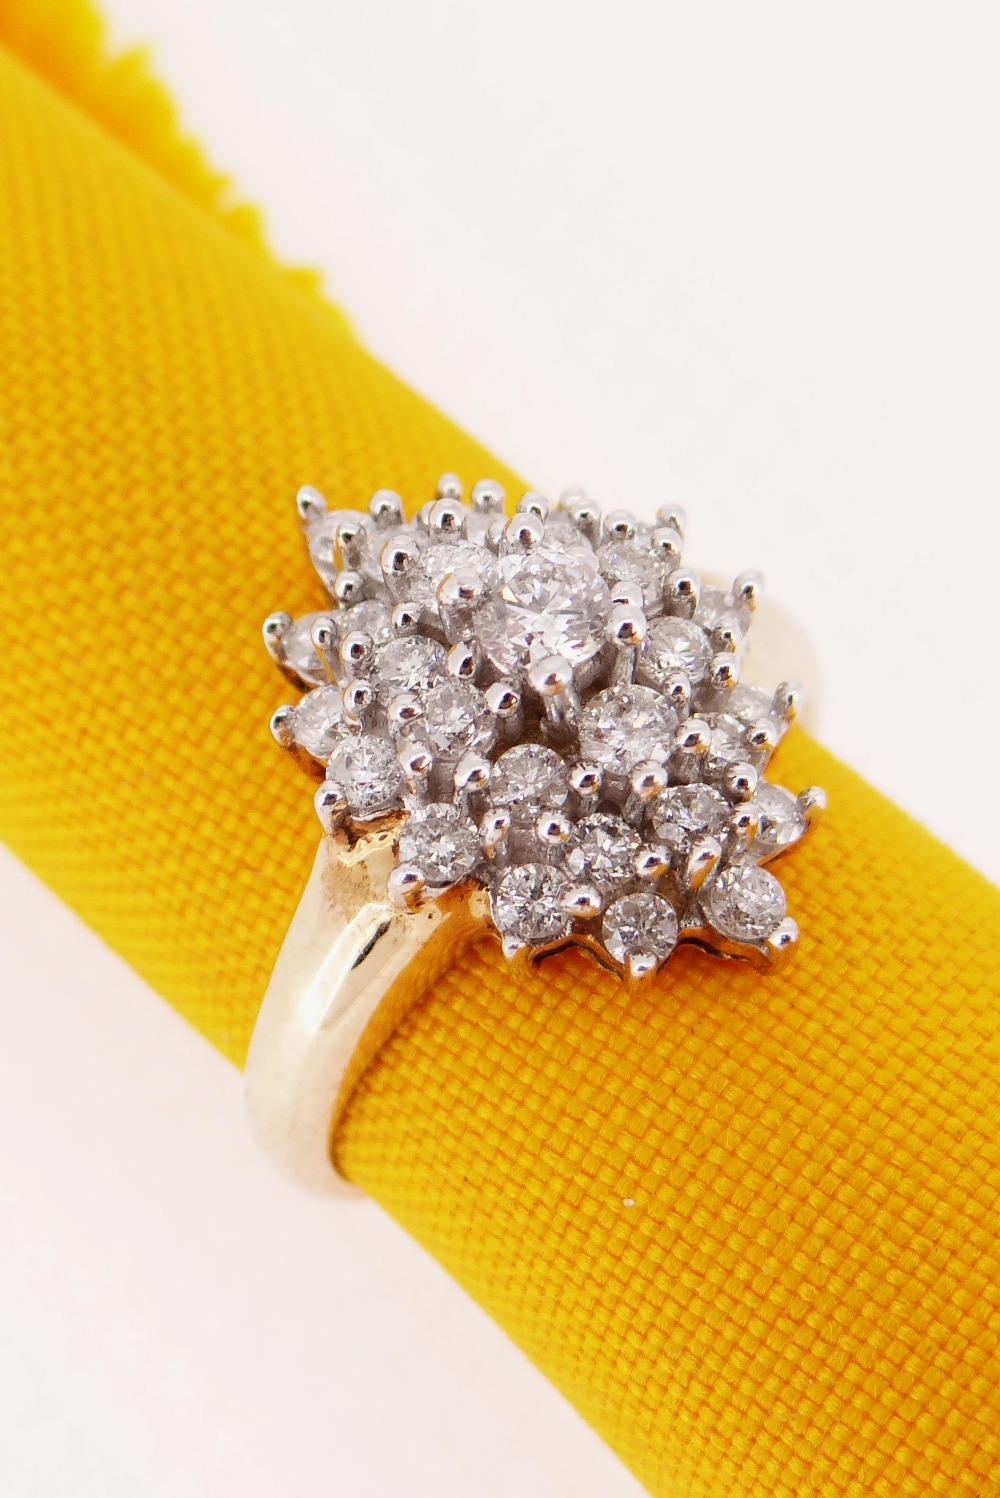 9CT GOLD DIAMOND CLUSTER RING, made up of twenty-nine graduated diamonds, ring size N / O, 4.8gms